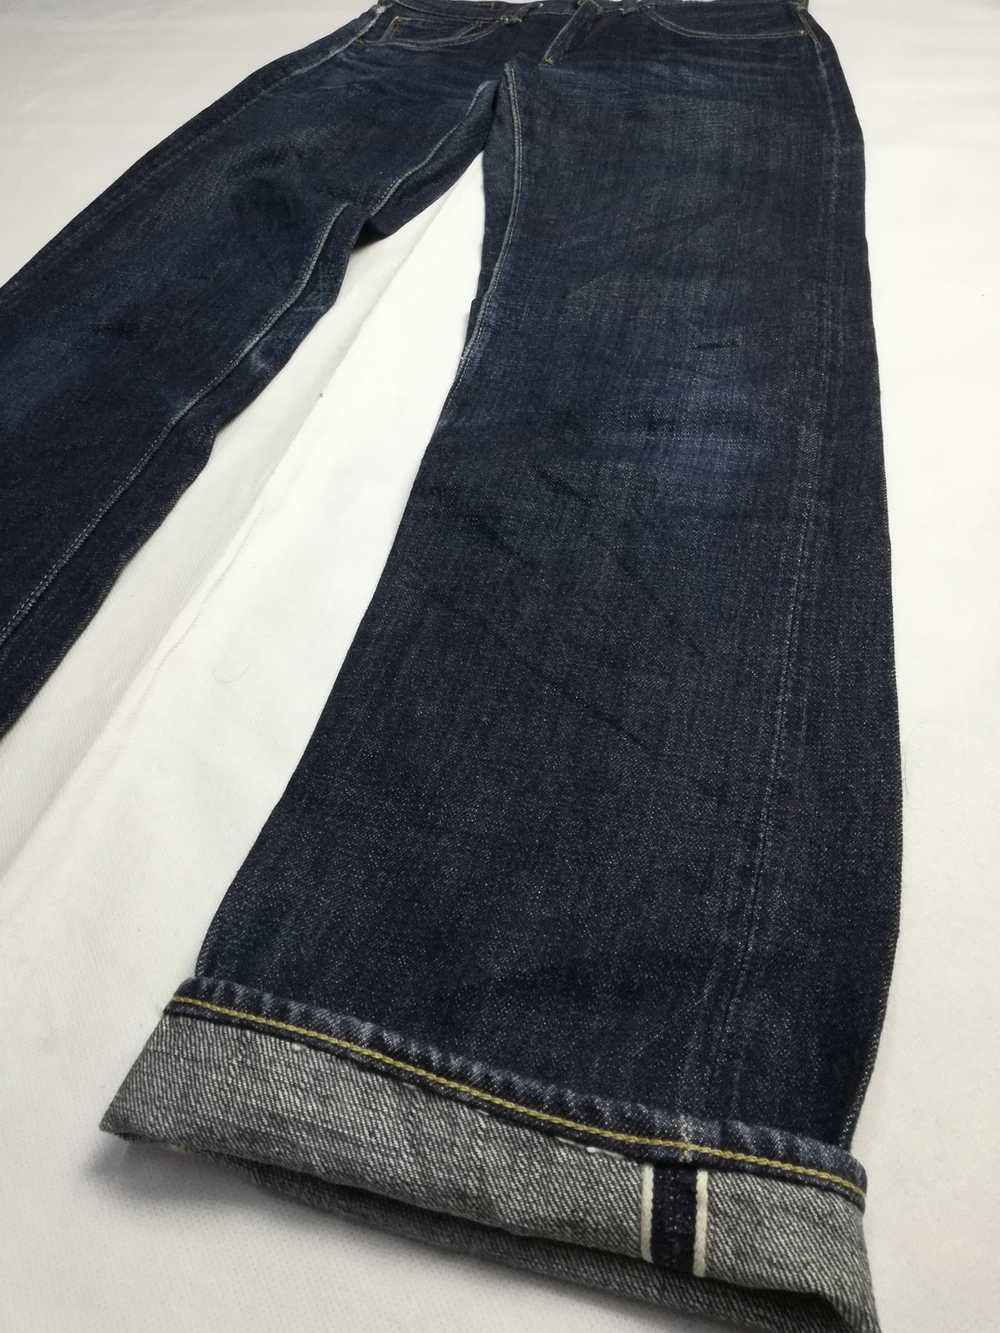 Orslow Orslow Selvedge Denim Jeans - image 5